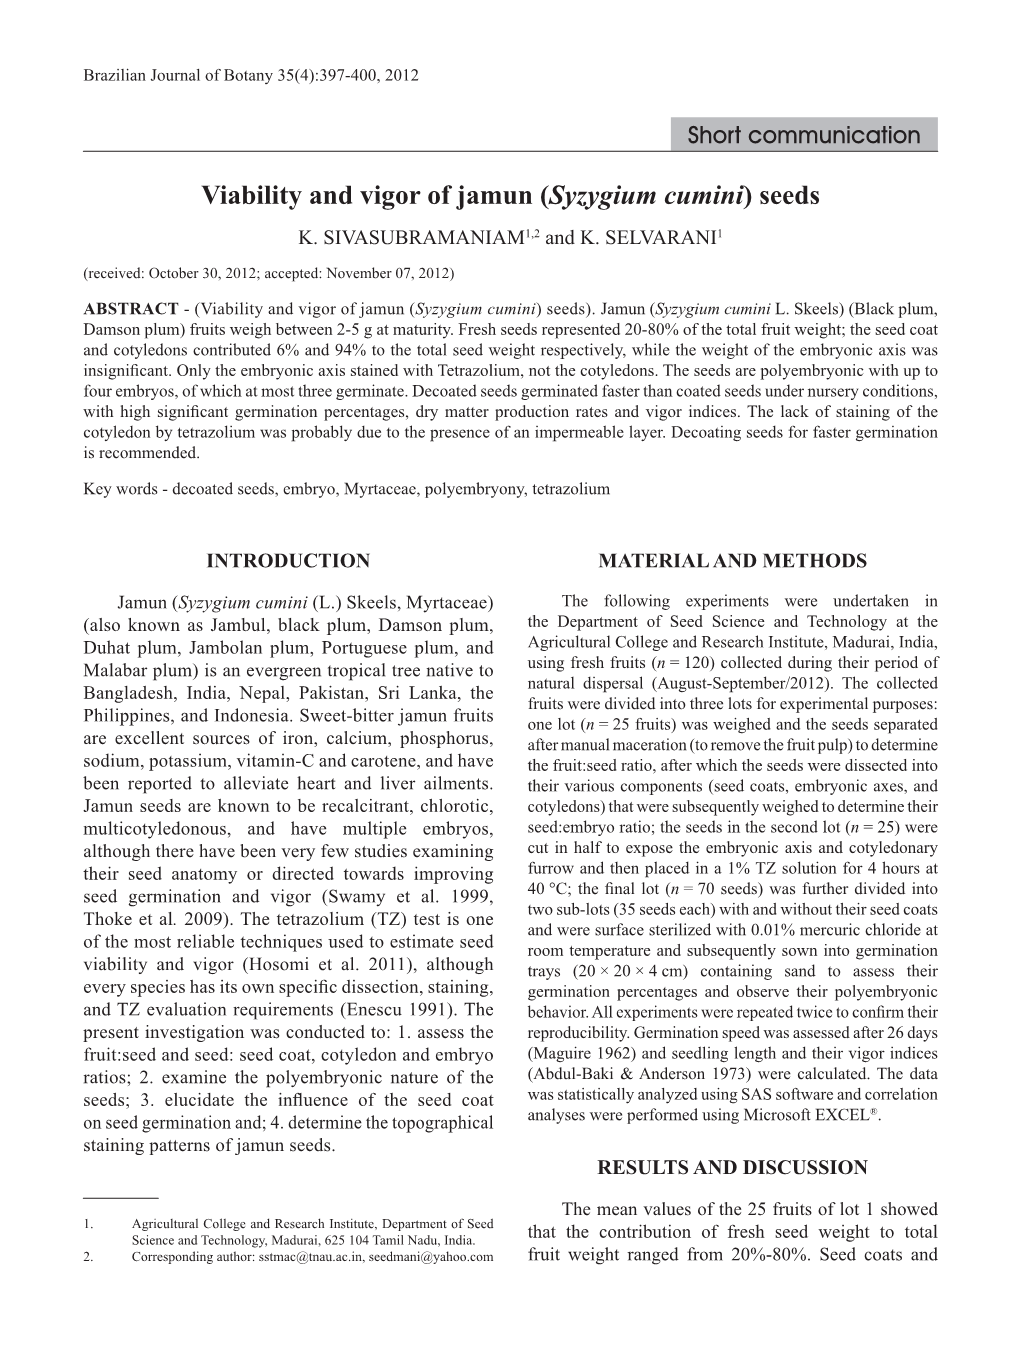 Viability and Vigor of Jamun (Syzygium Cumini) Seeds K